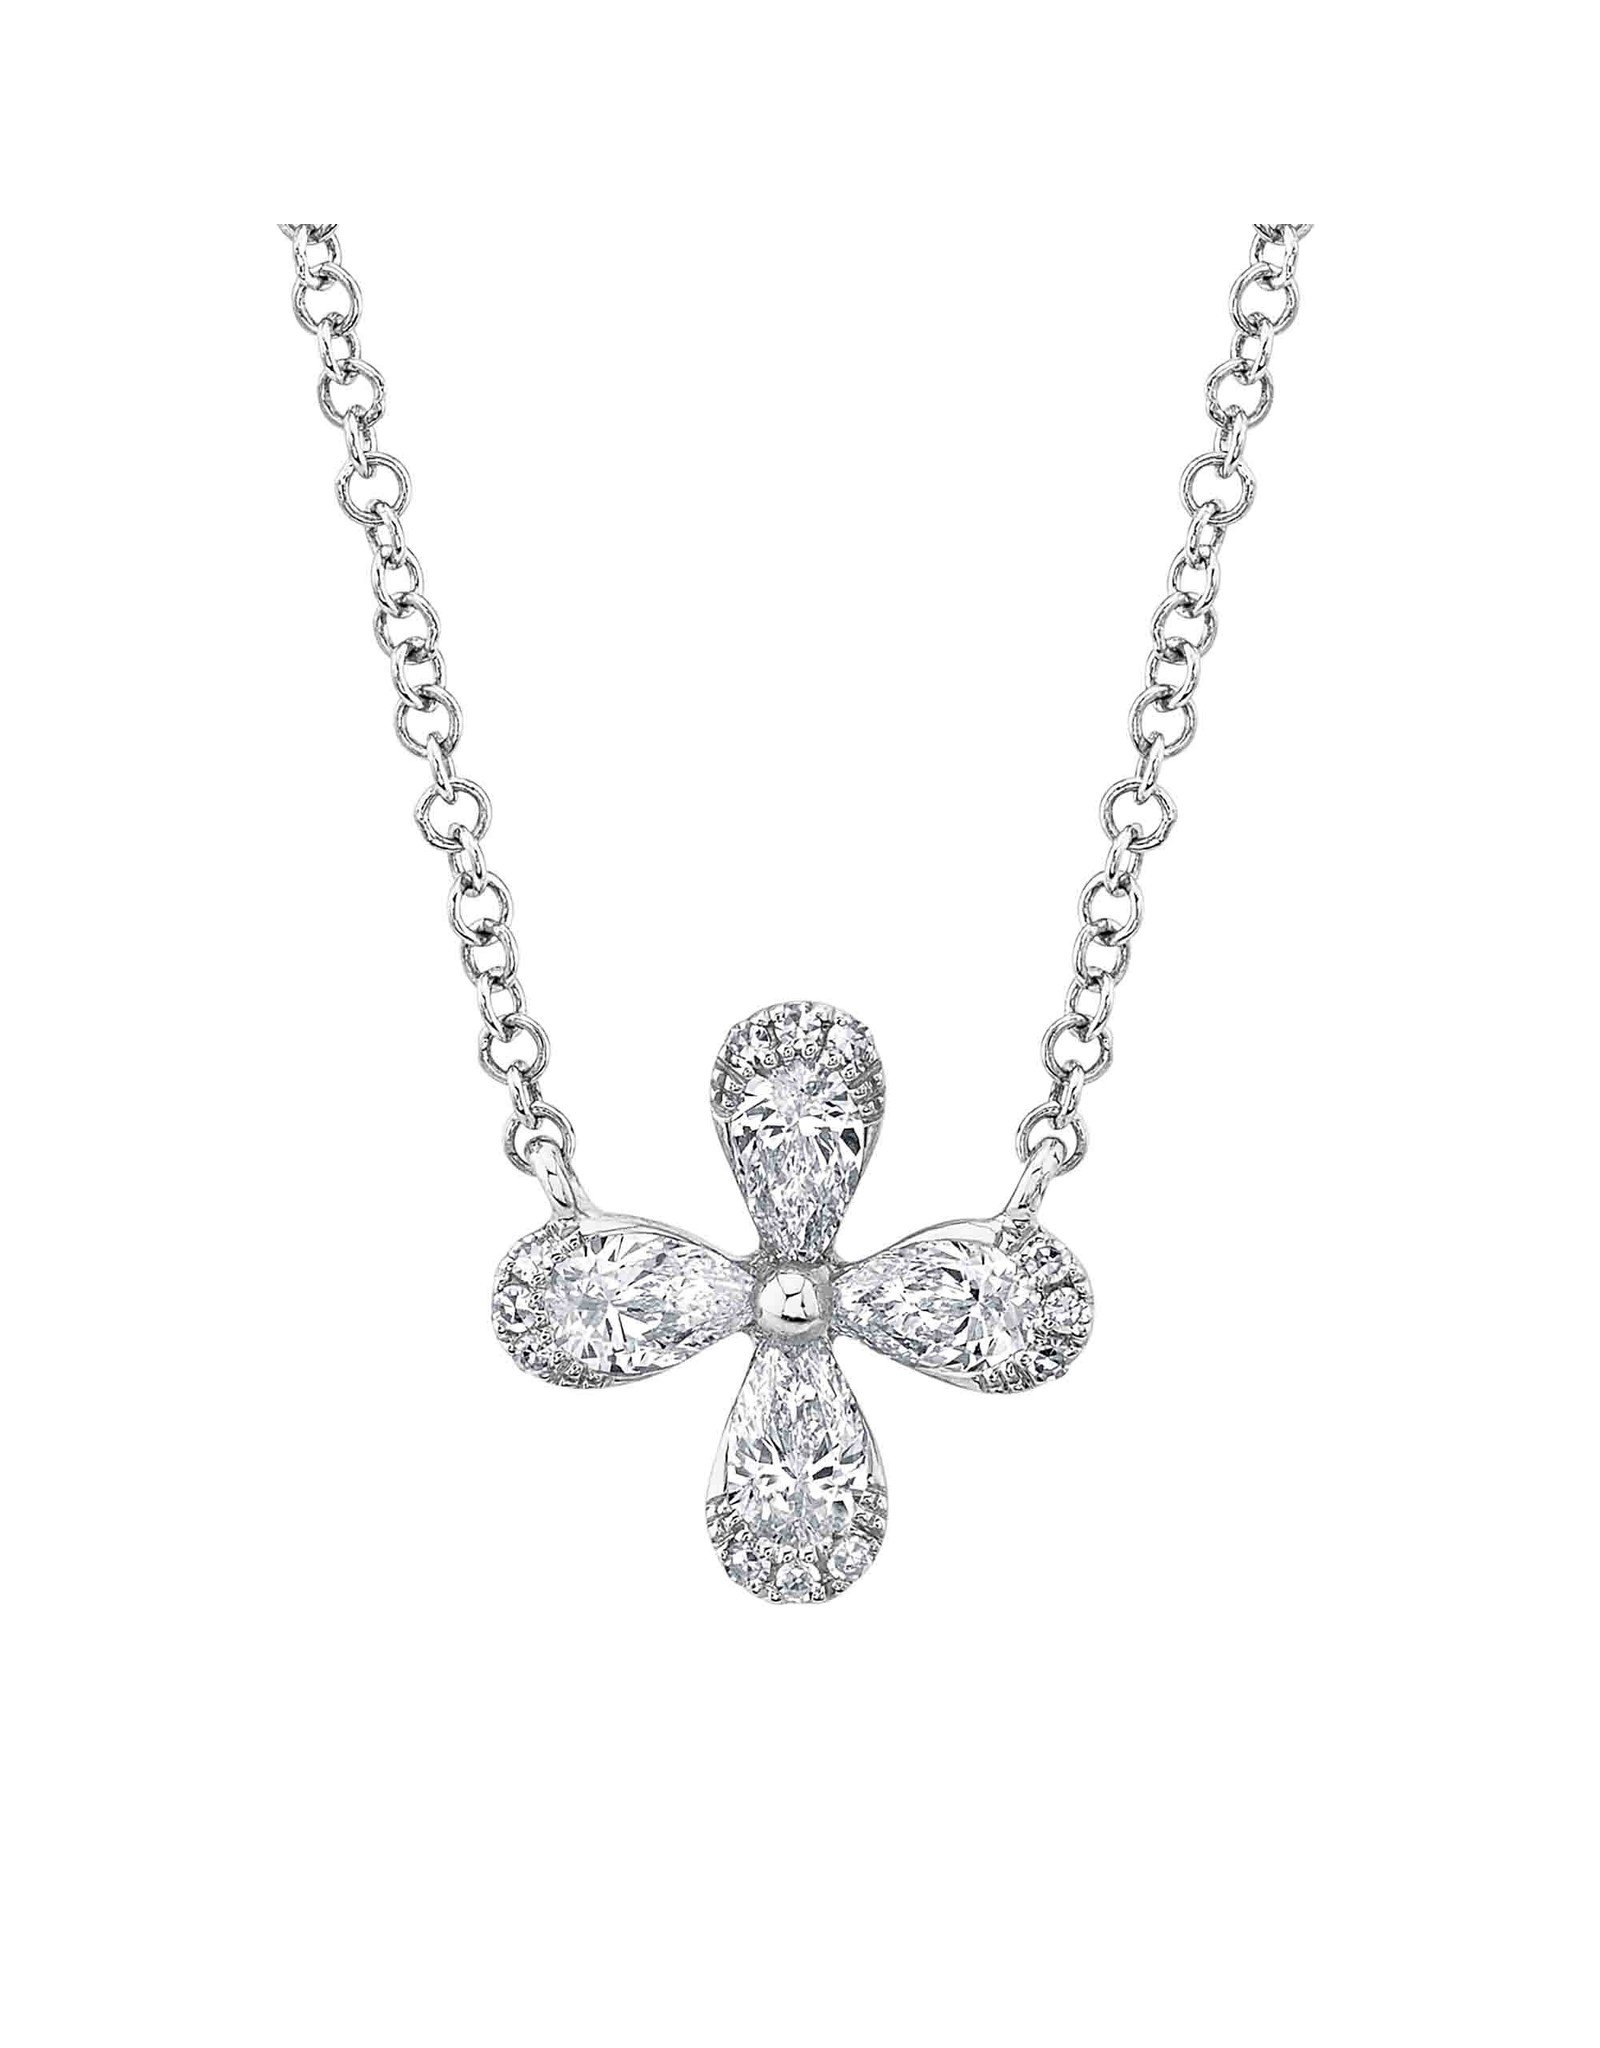 14K White Gold Diamond Flower Necklace, D: 0.37ct